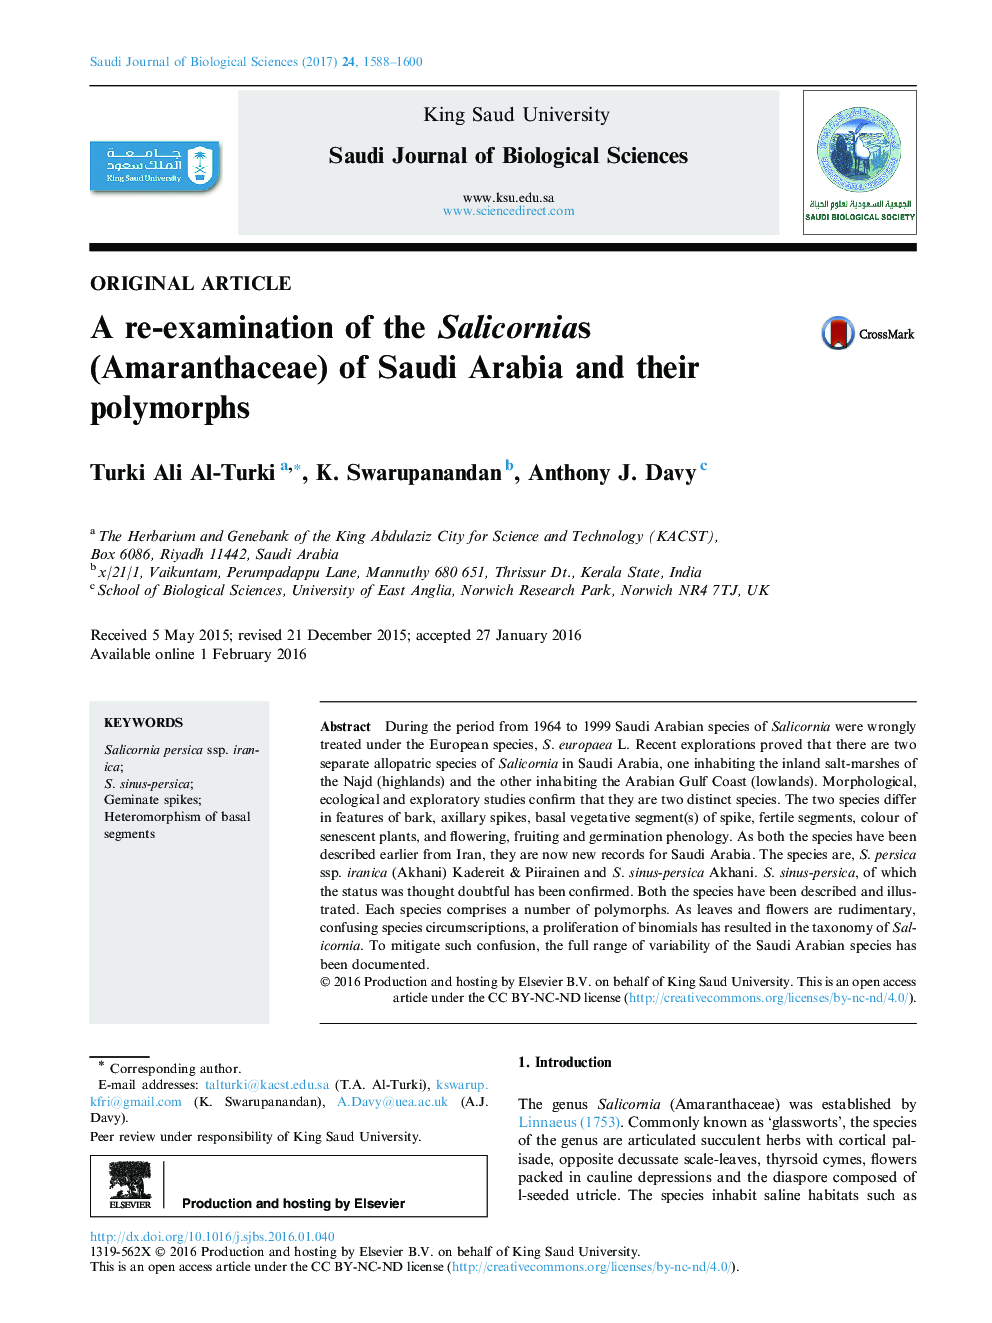 Original articleA re-examination of the Salicornias (Amaranthaceae) of Saudi Arabia and their polymorphs